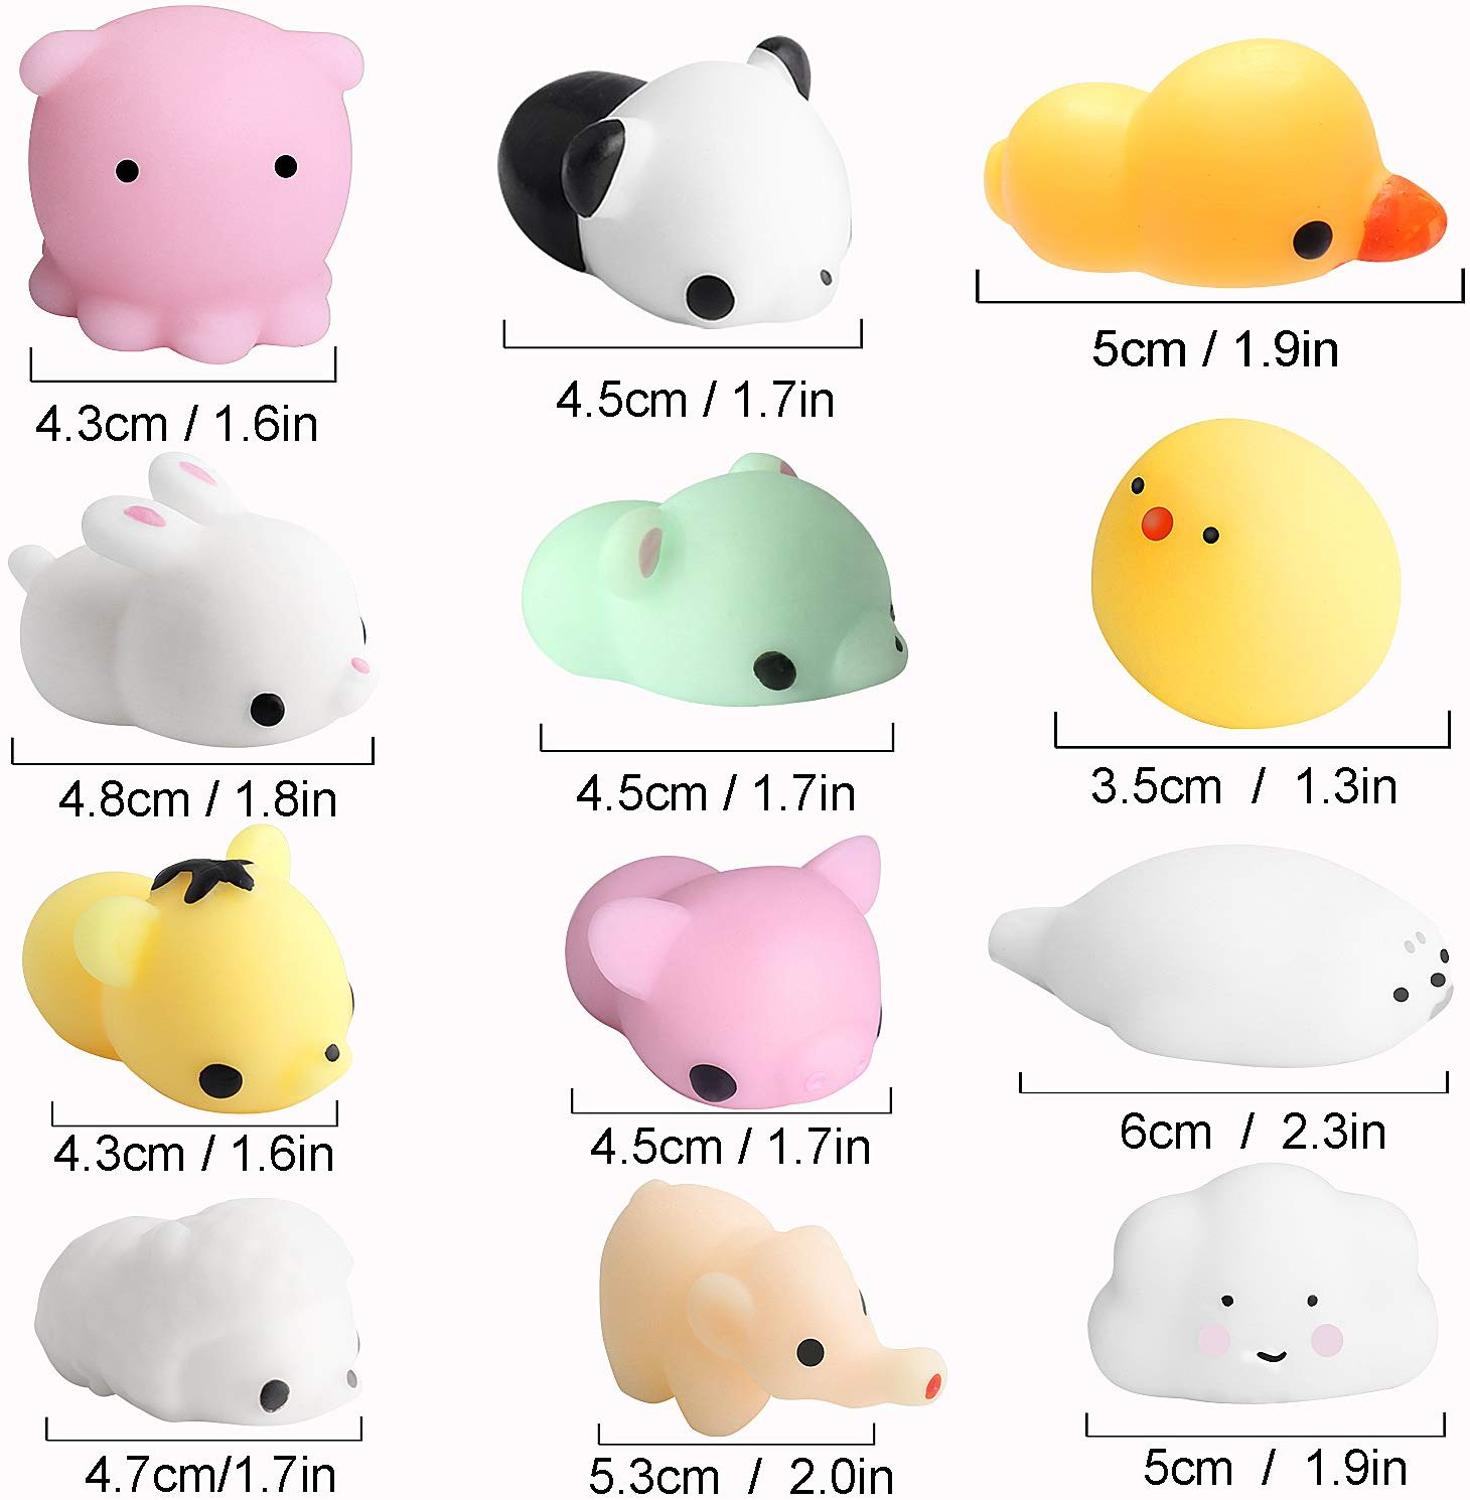 Mini Mochi Fidget Animals (Squishies) - Buy Mochi fidgets online